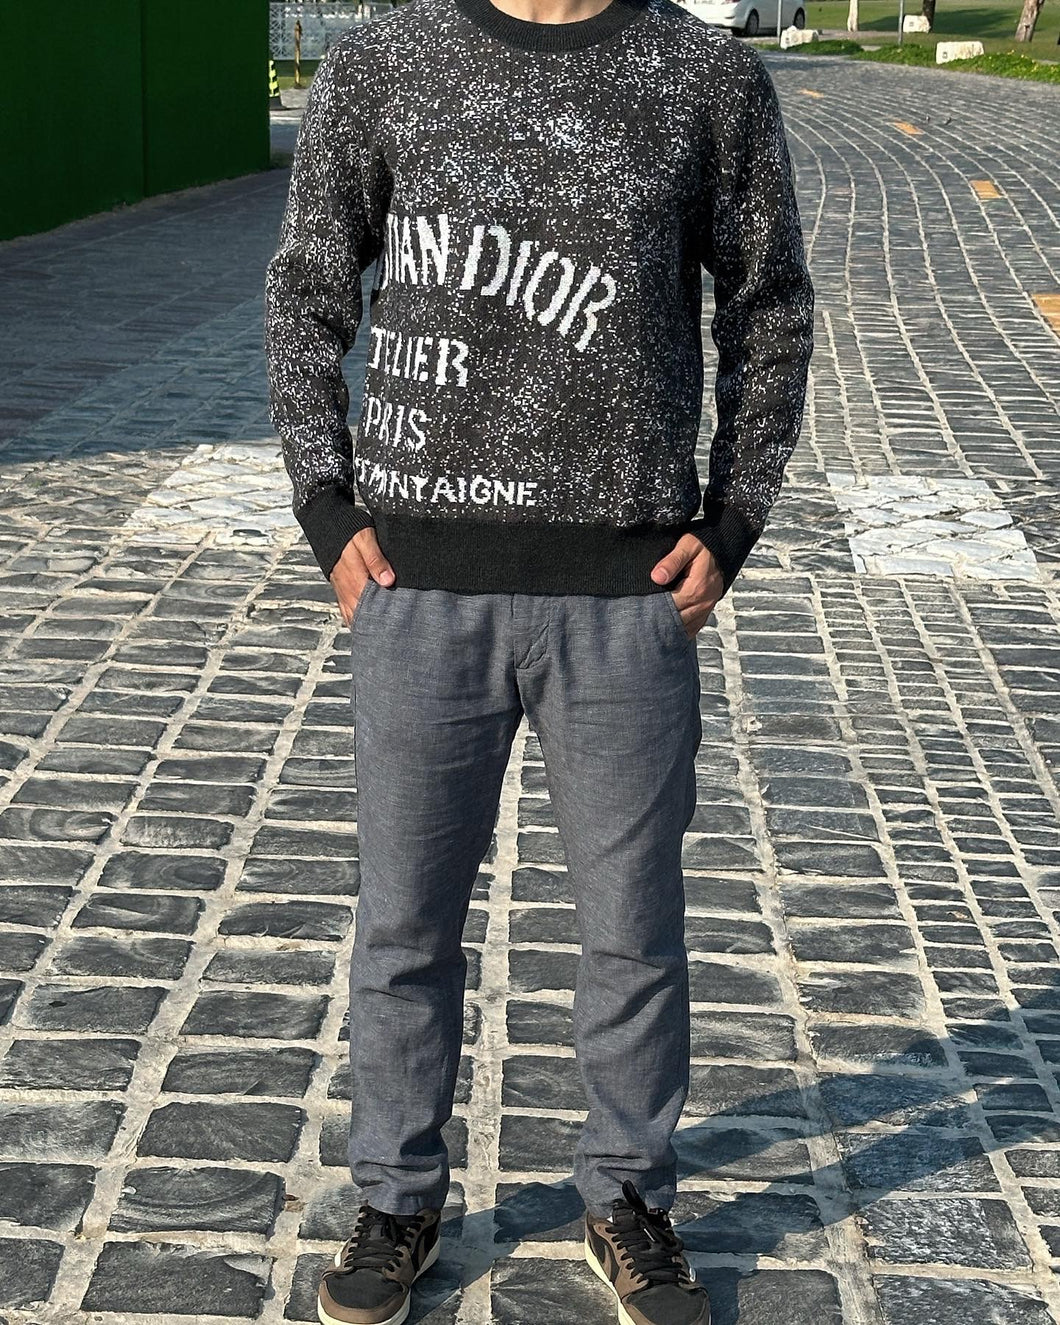 Dior Sweatshirt